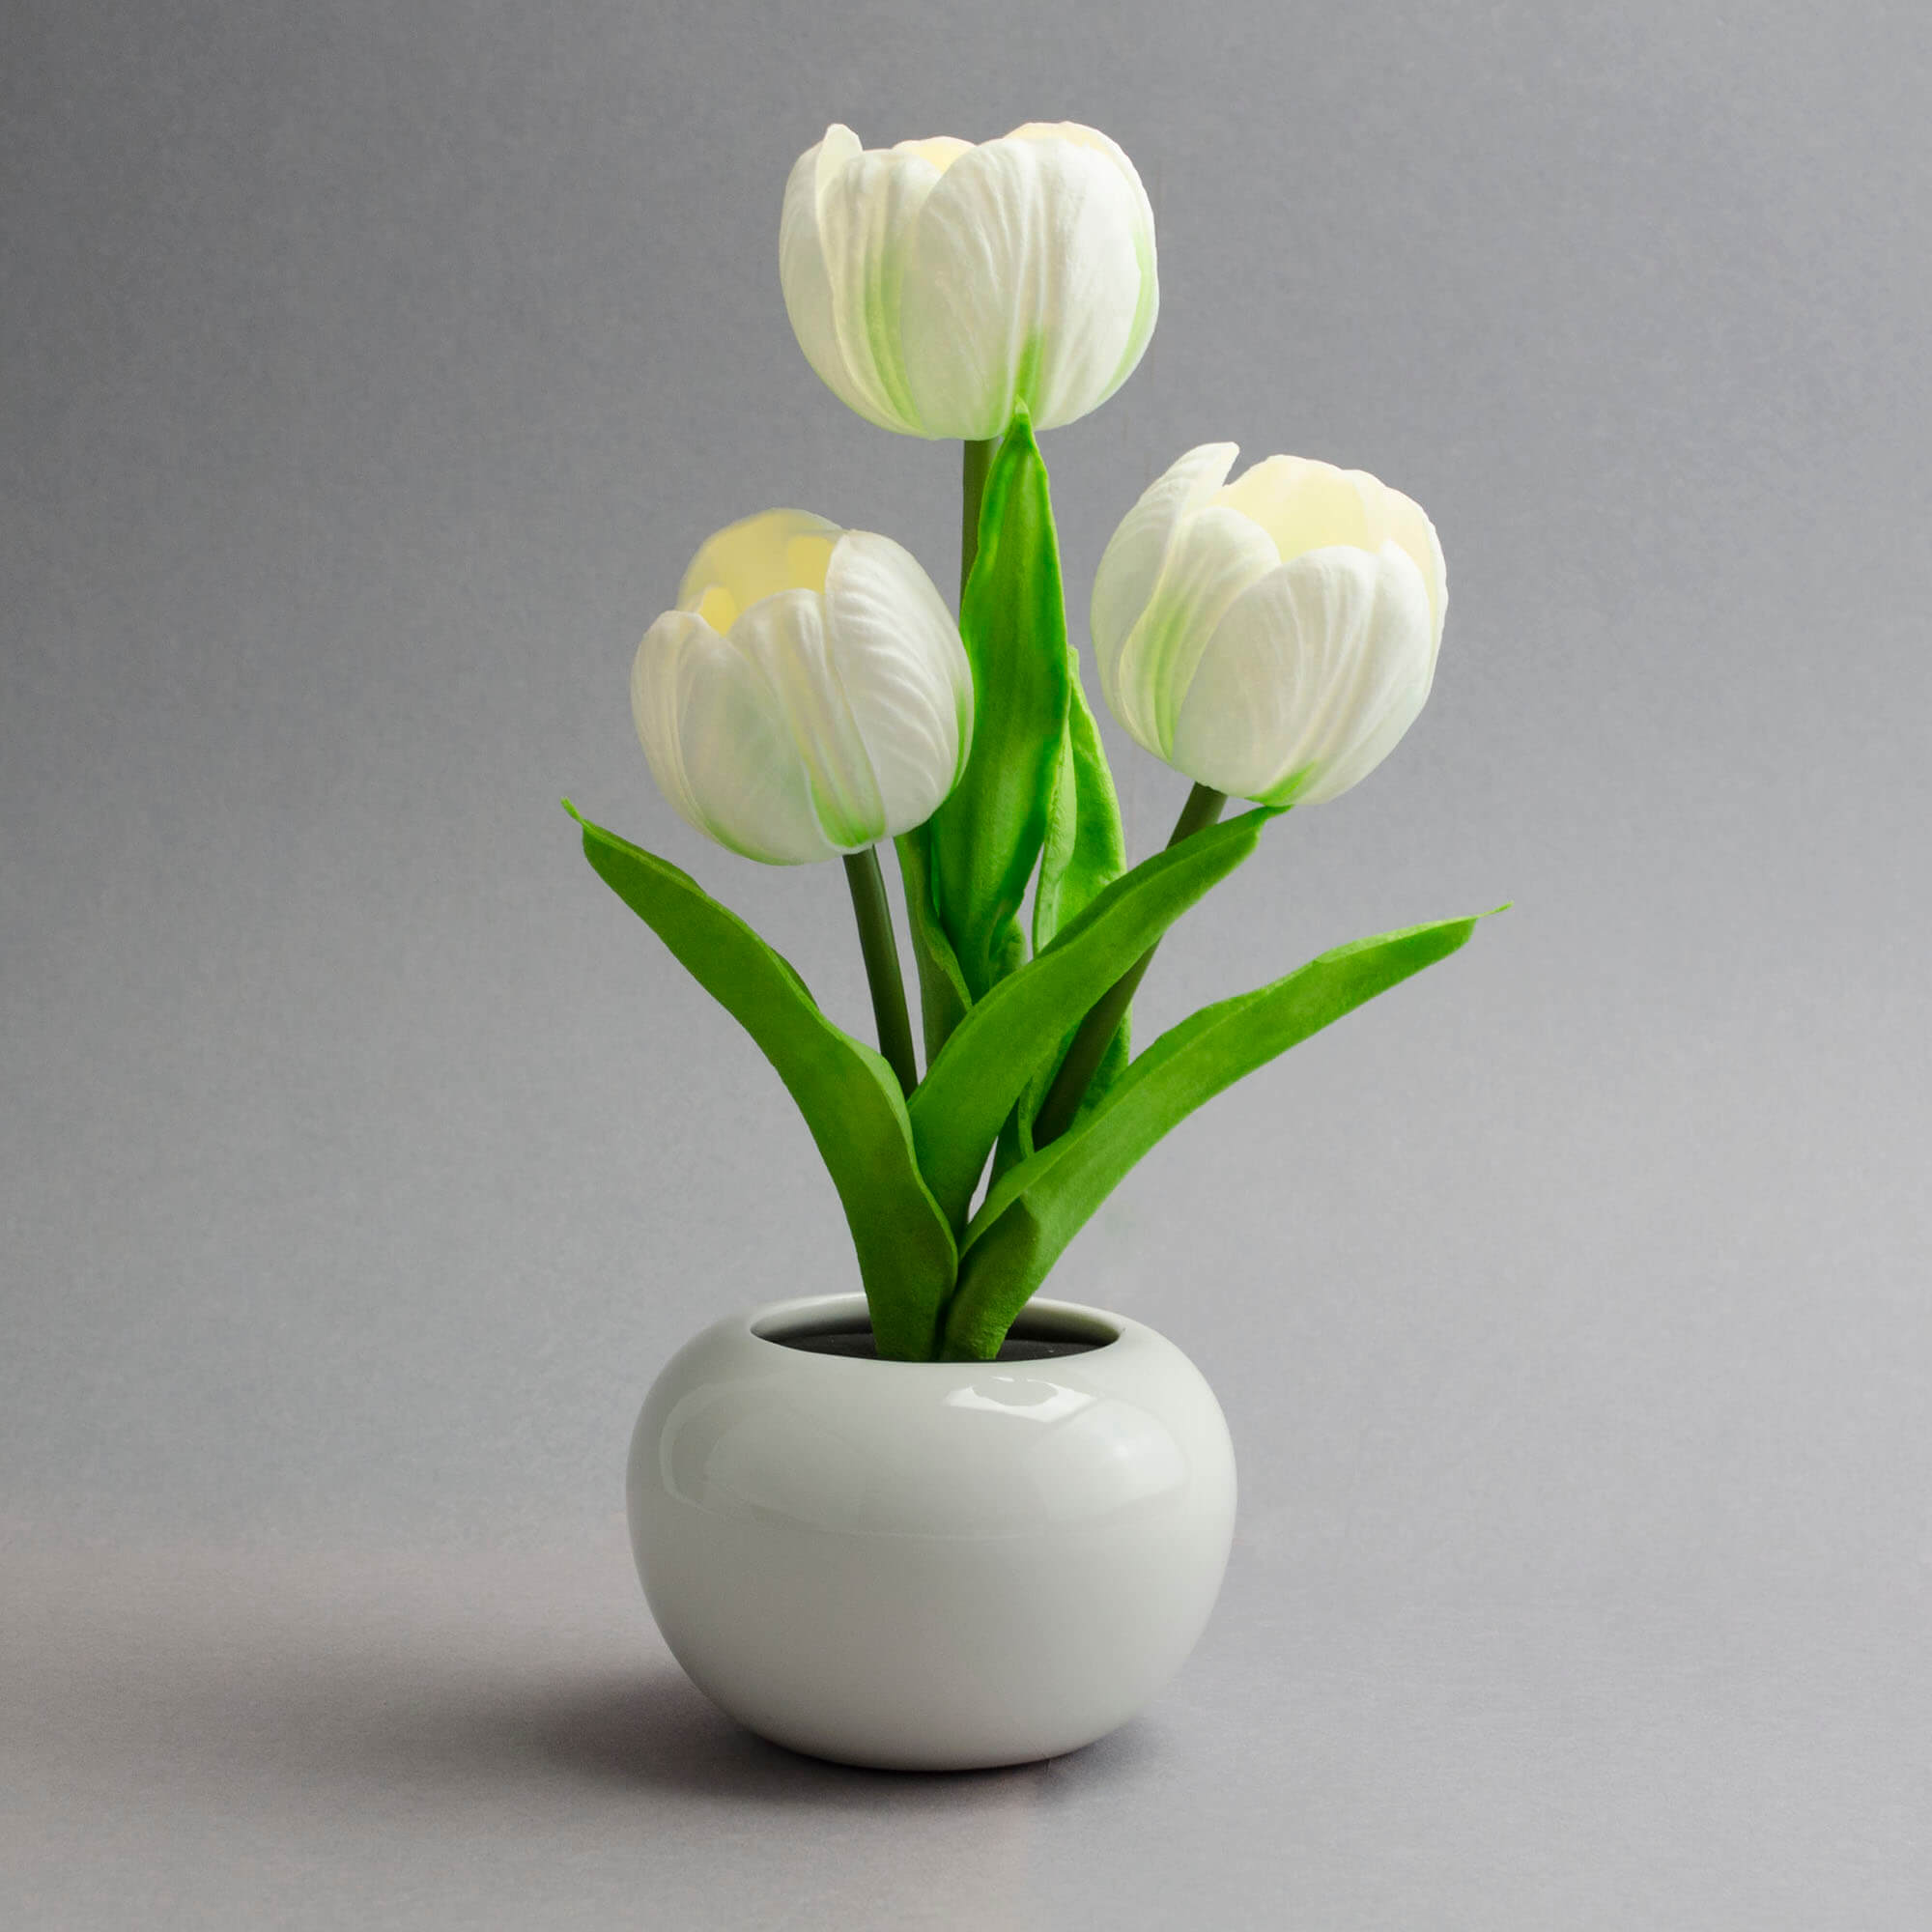 X4-LIFE LED Tulpen im Blumentopf, Deko Blumen inklusive Batterie - weiss